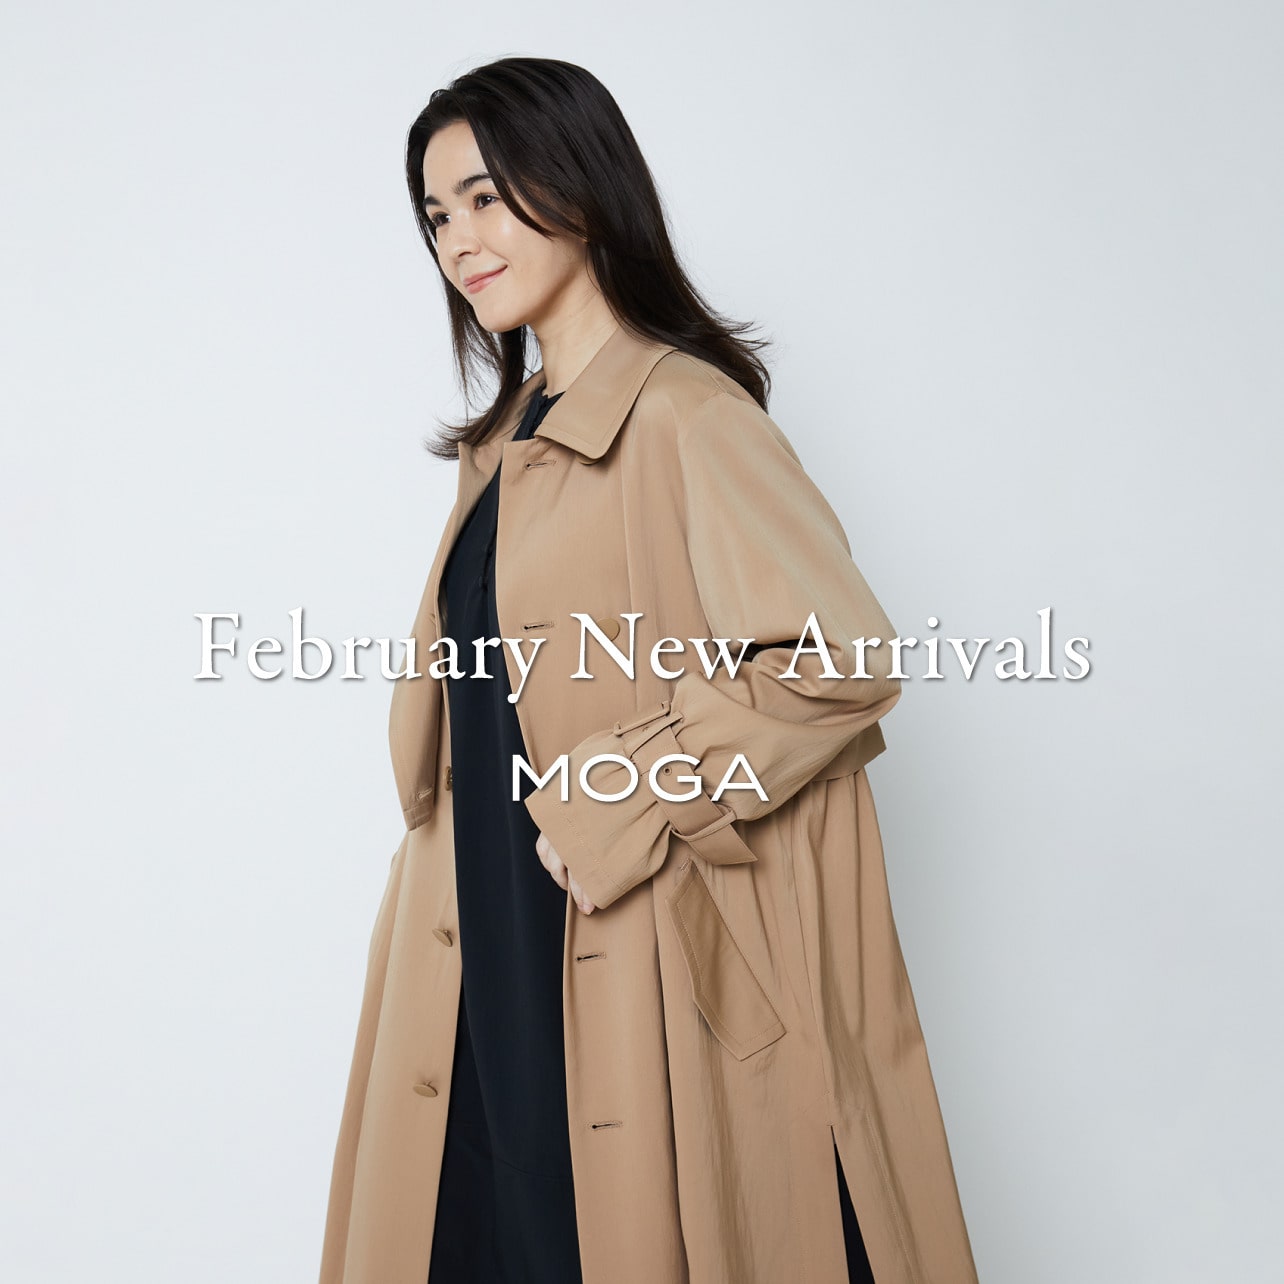 MOGA February New Arrivals